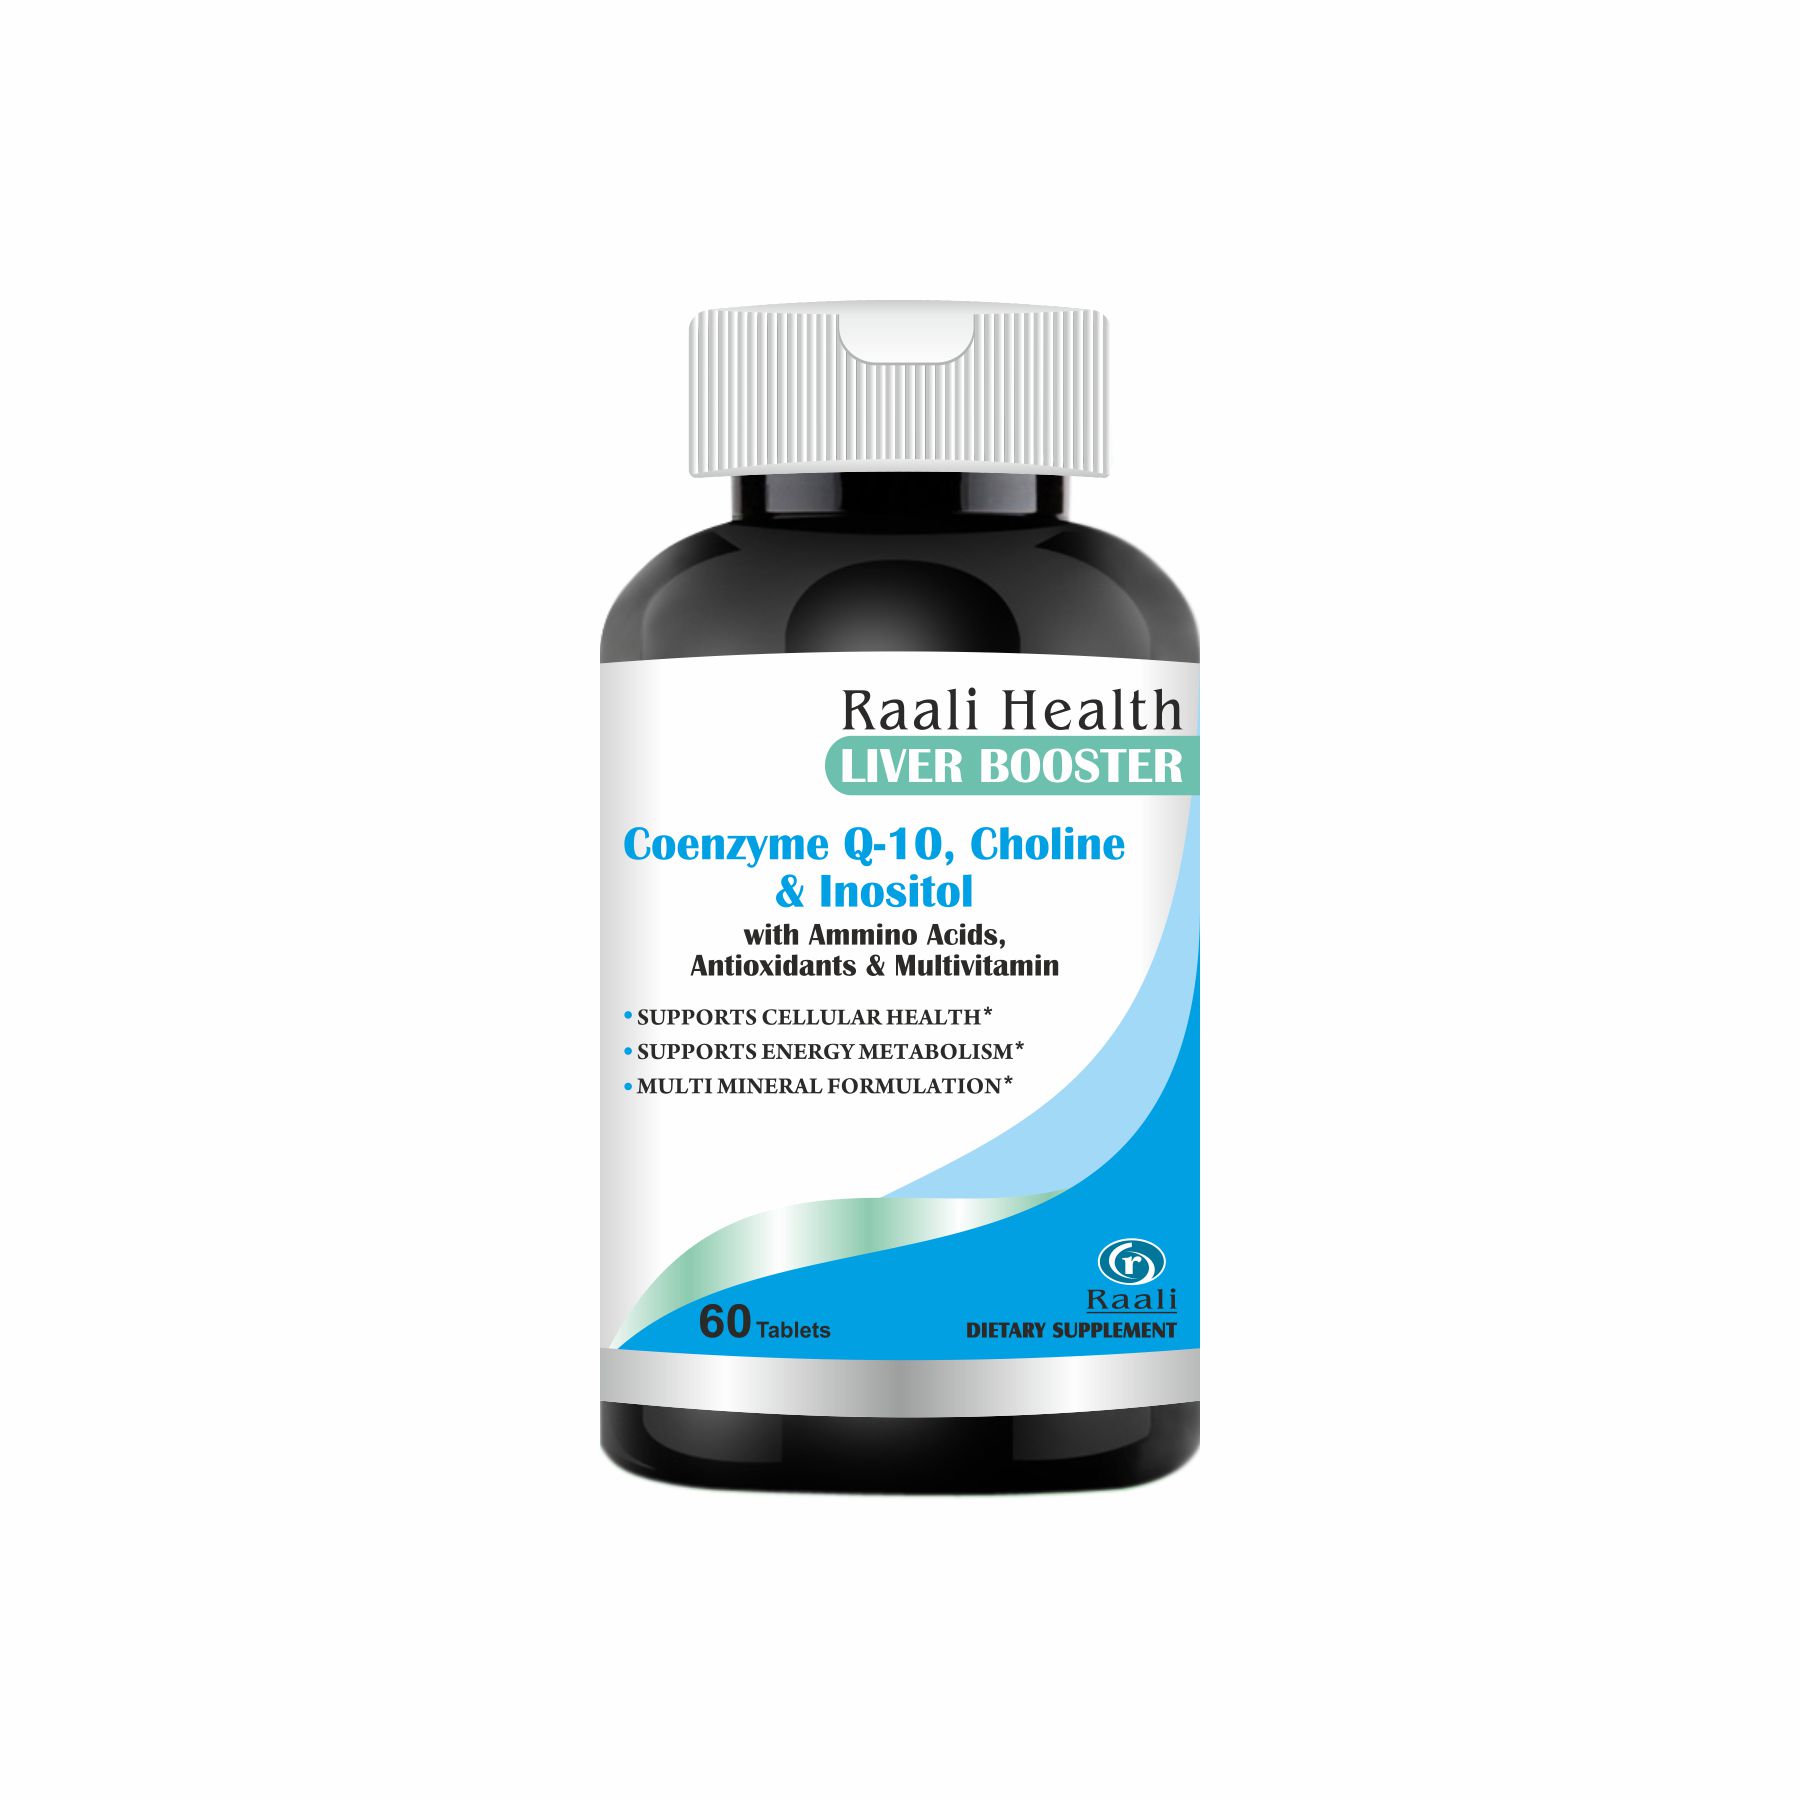 Coenzyme Q10, choline & inositol, multivitamin & multiminerals, heart health, liver booster